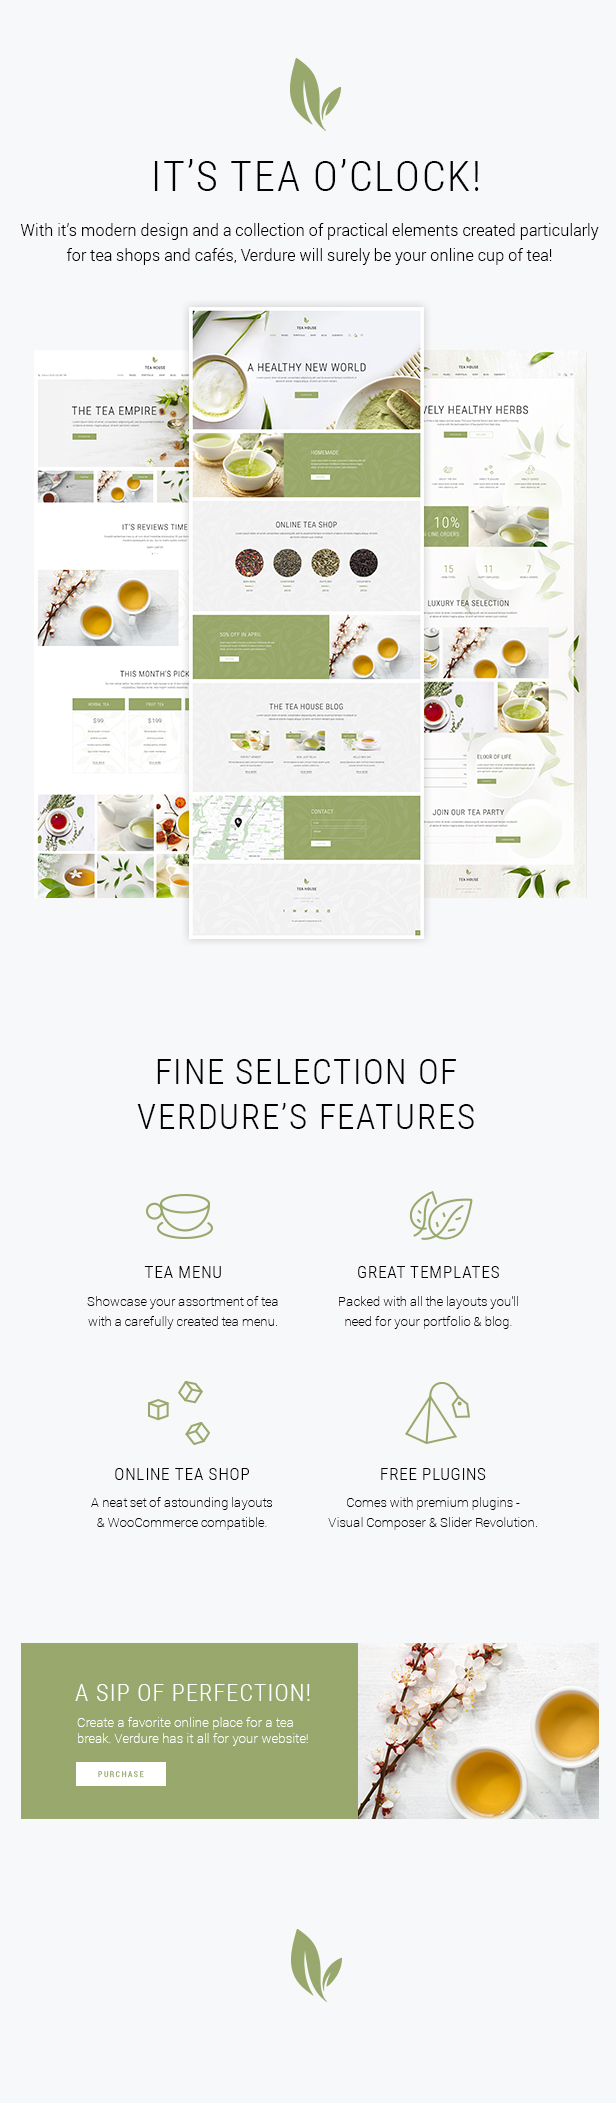 WordPress theme Verdure - A Modern Tea House and Shop Theme (Food)